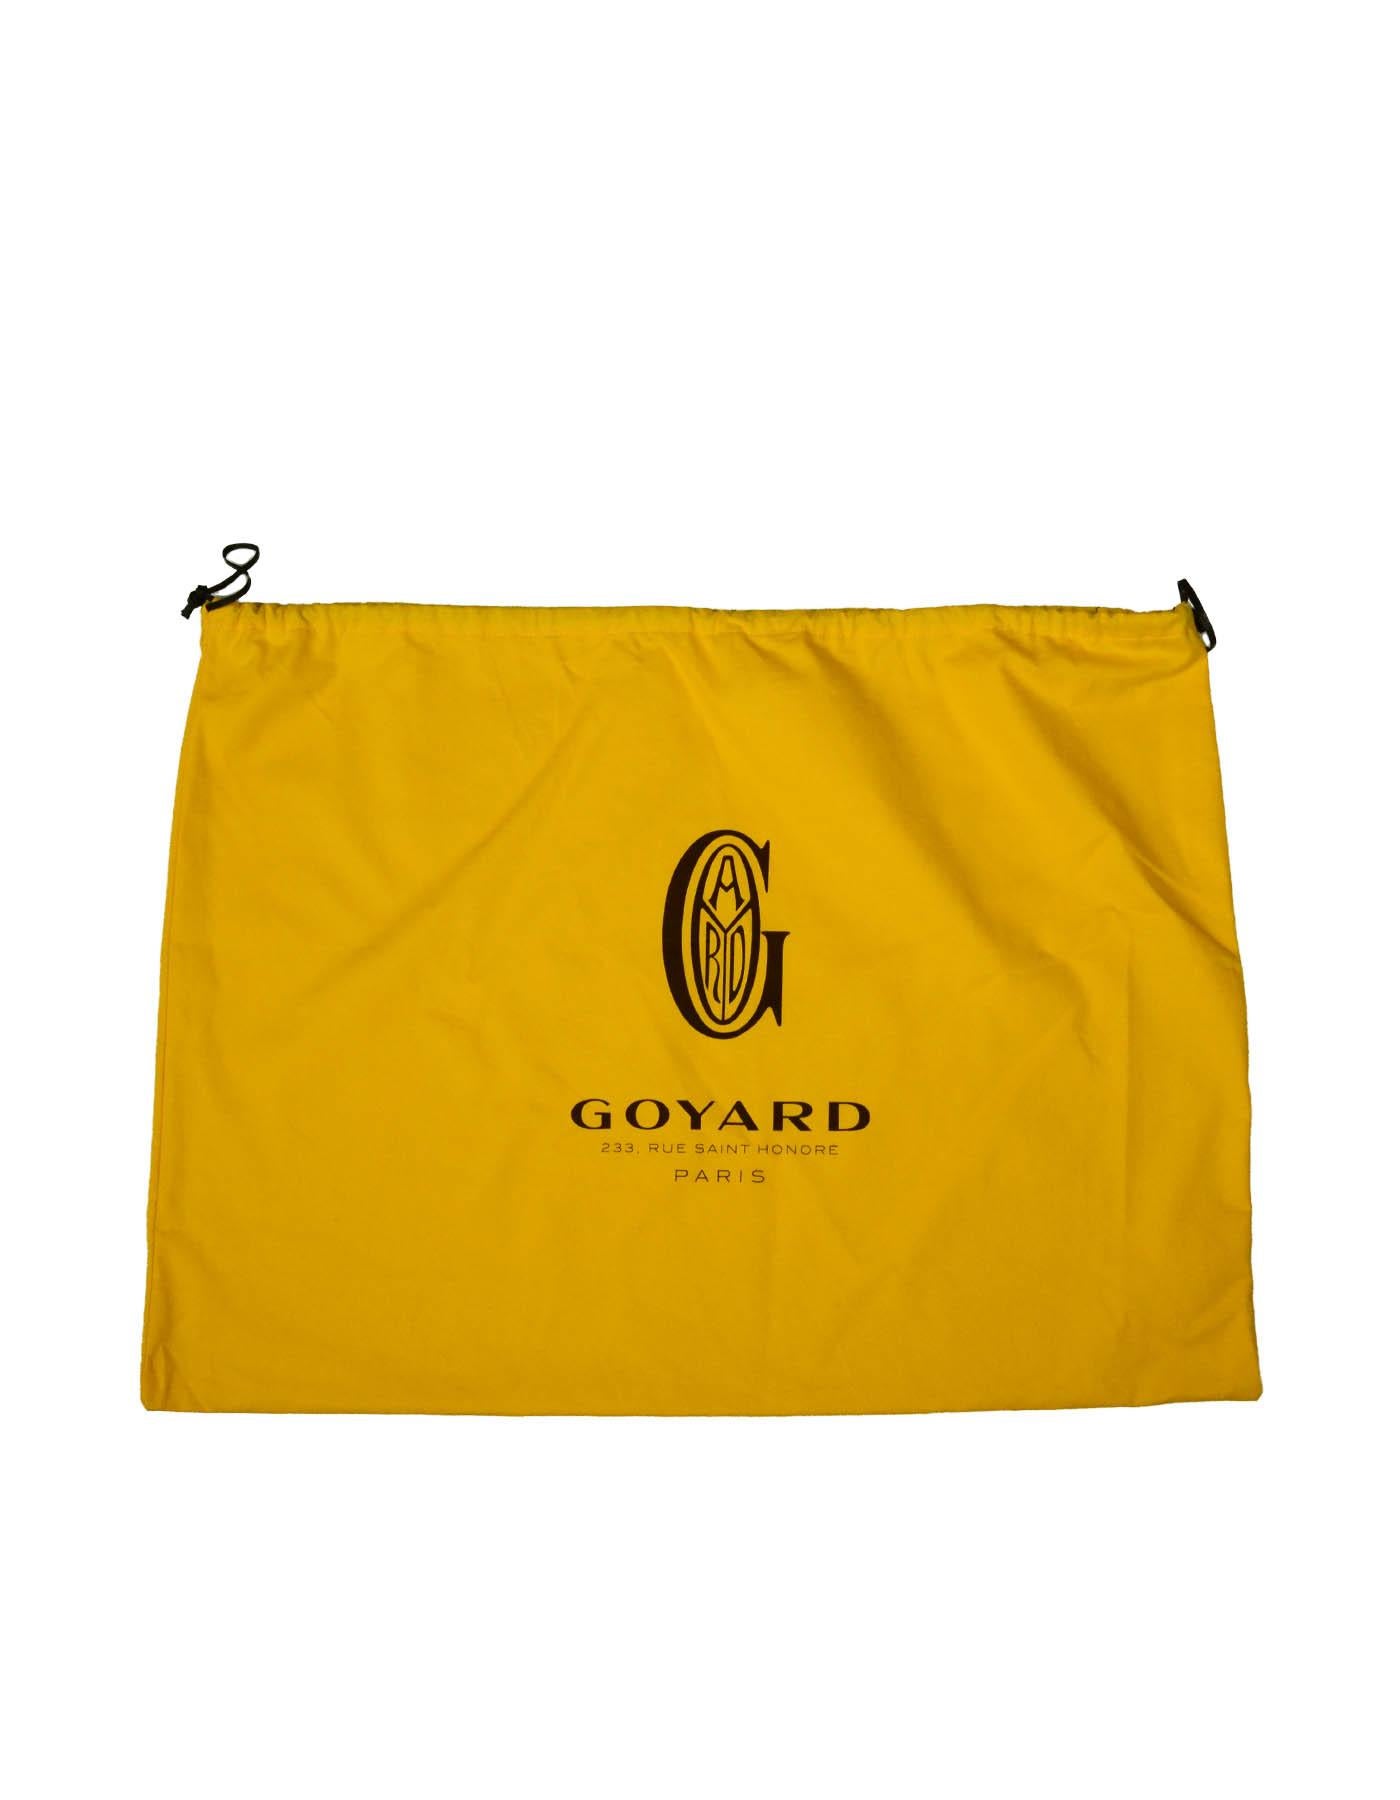 Goyard 2020 Yellow Goyardine Canvas Bulldog Villette Tote Bag 3